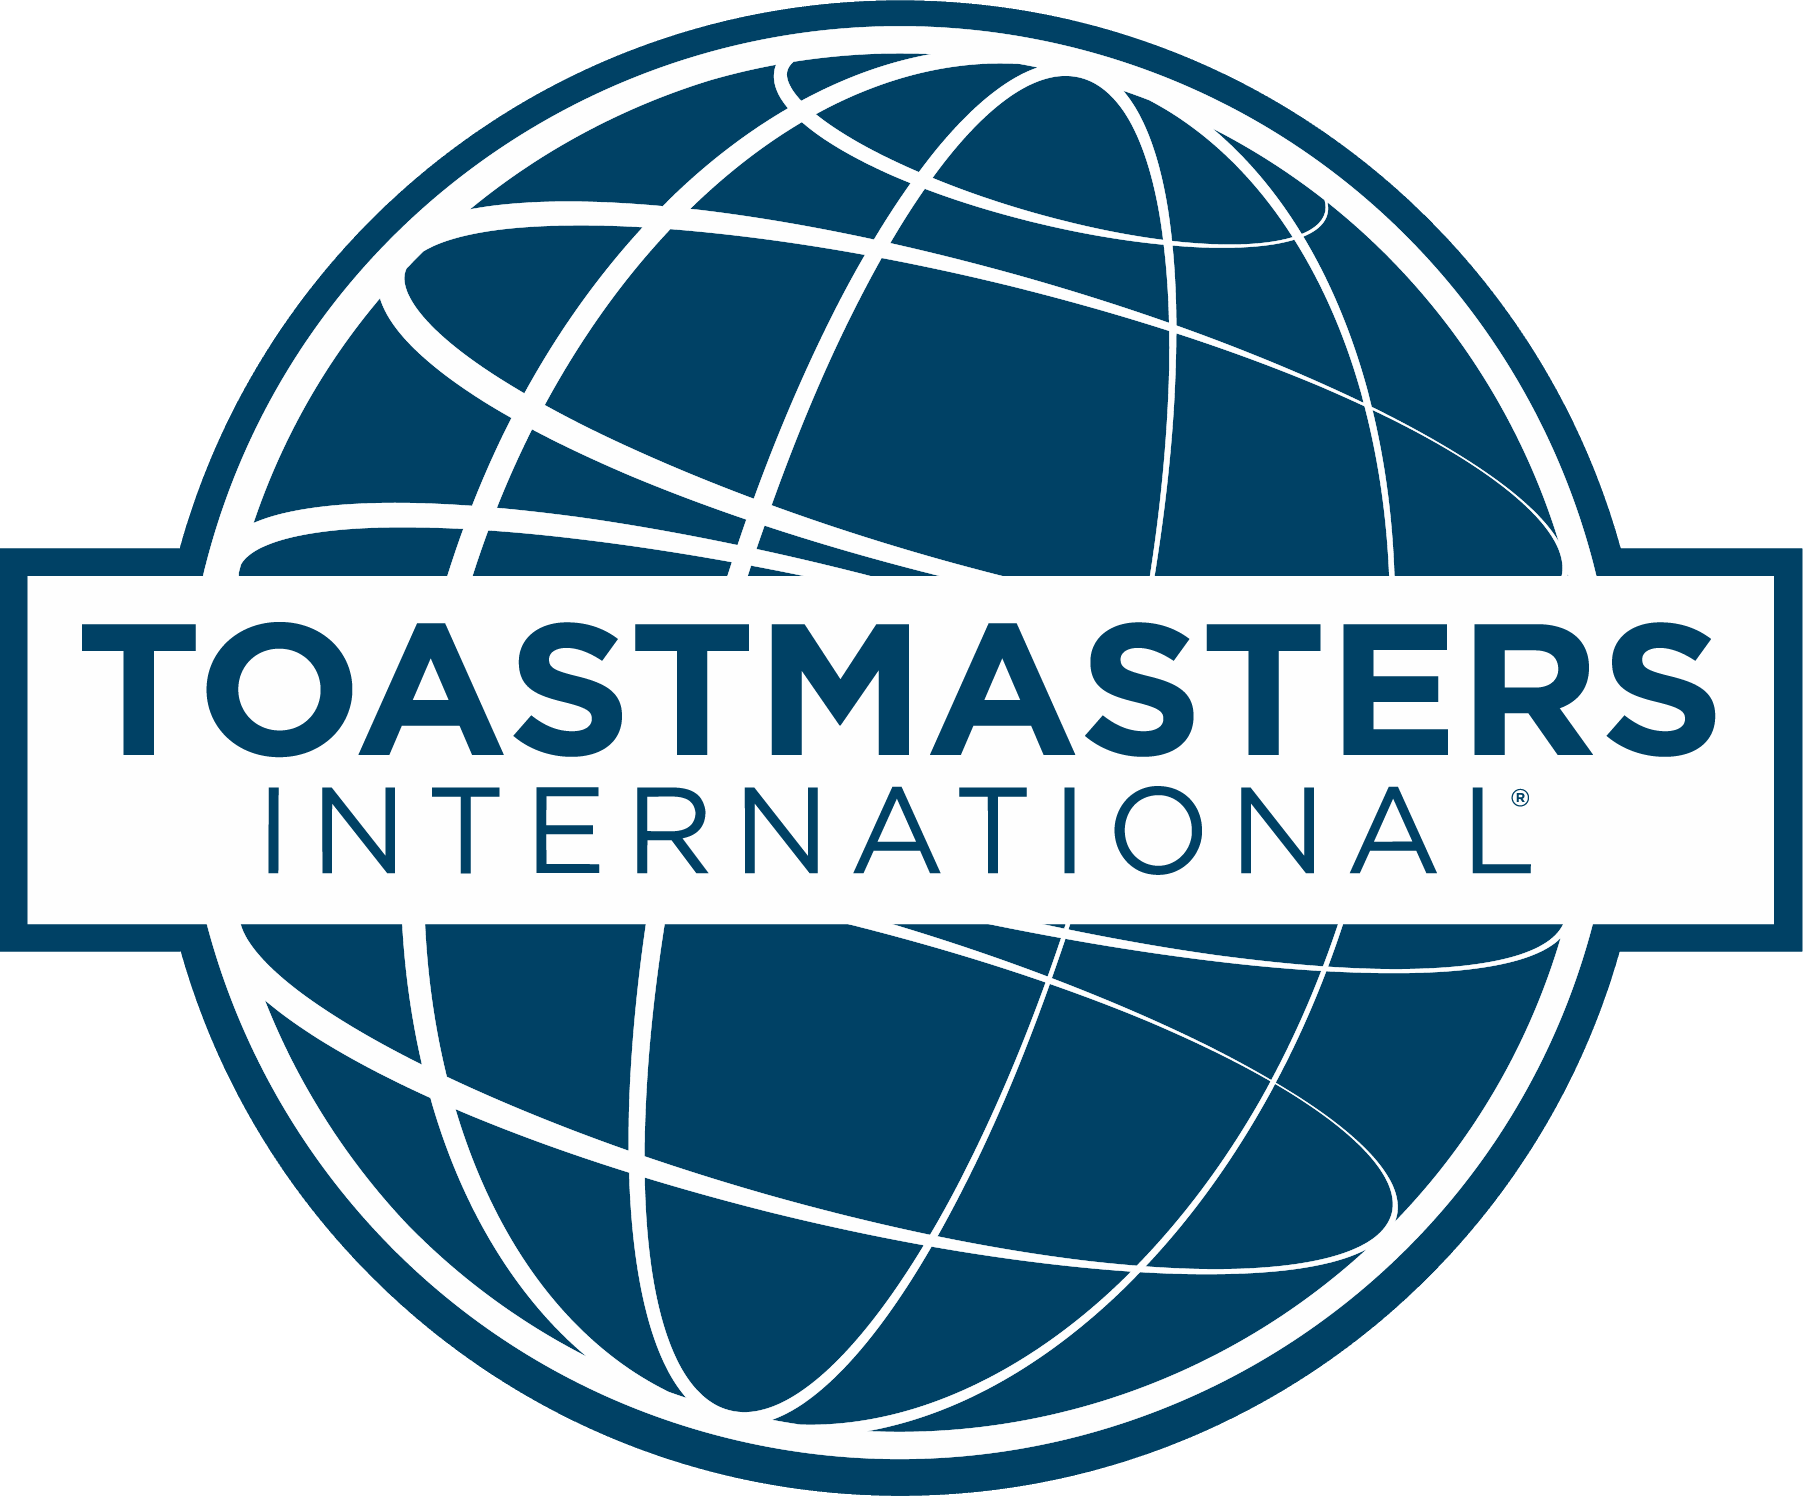 Toastmasters Logo - Toastmasters International -Logo and Design Elements